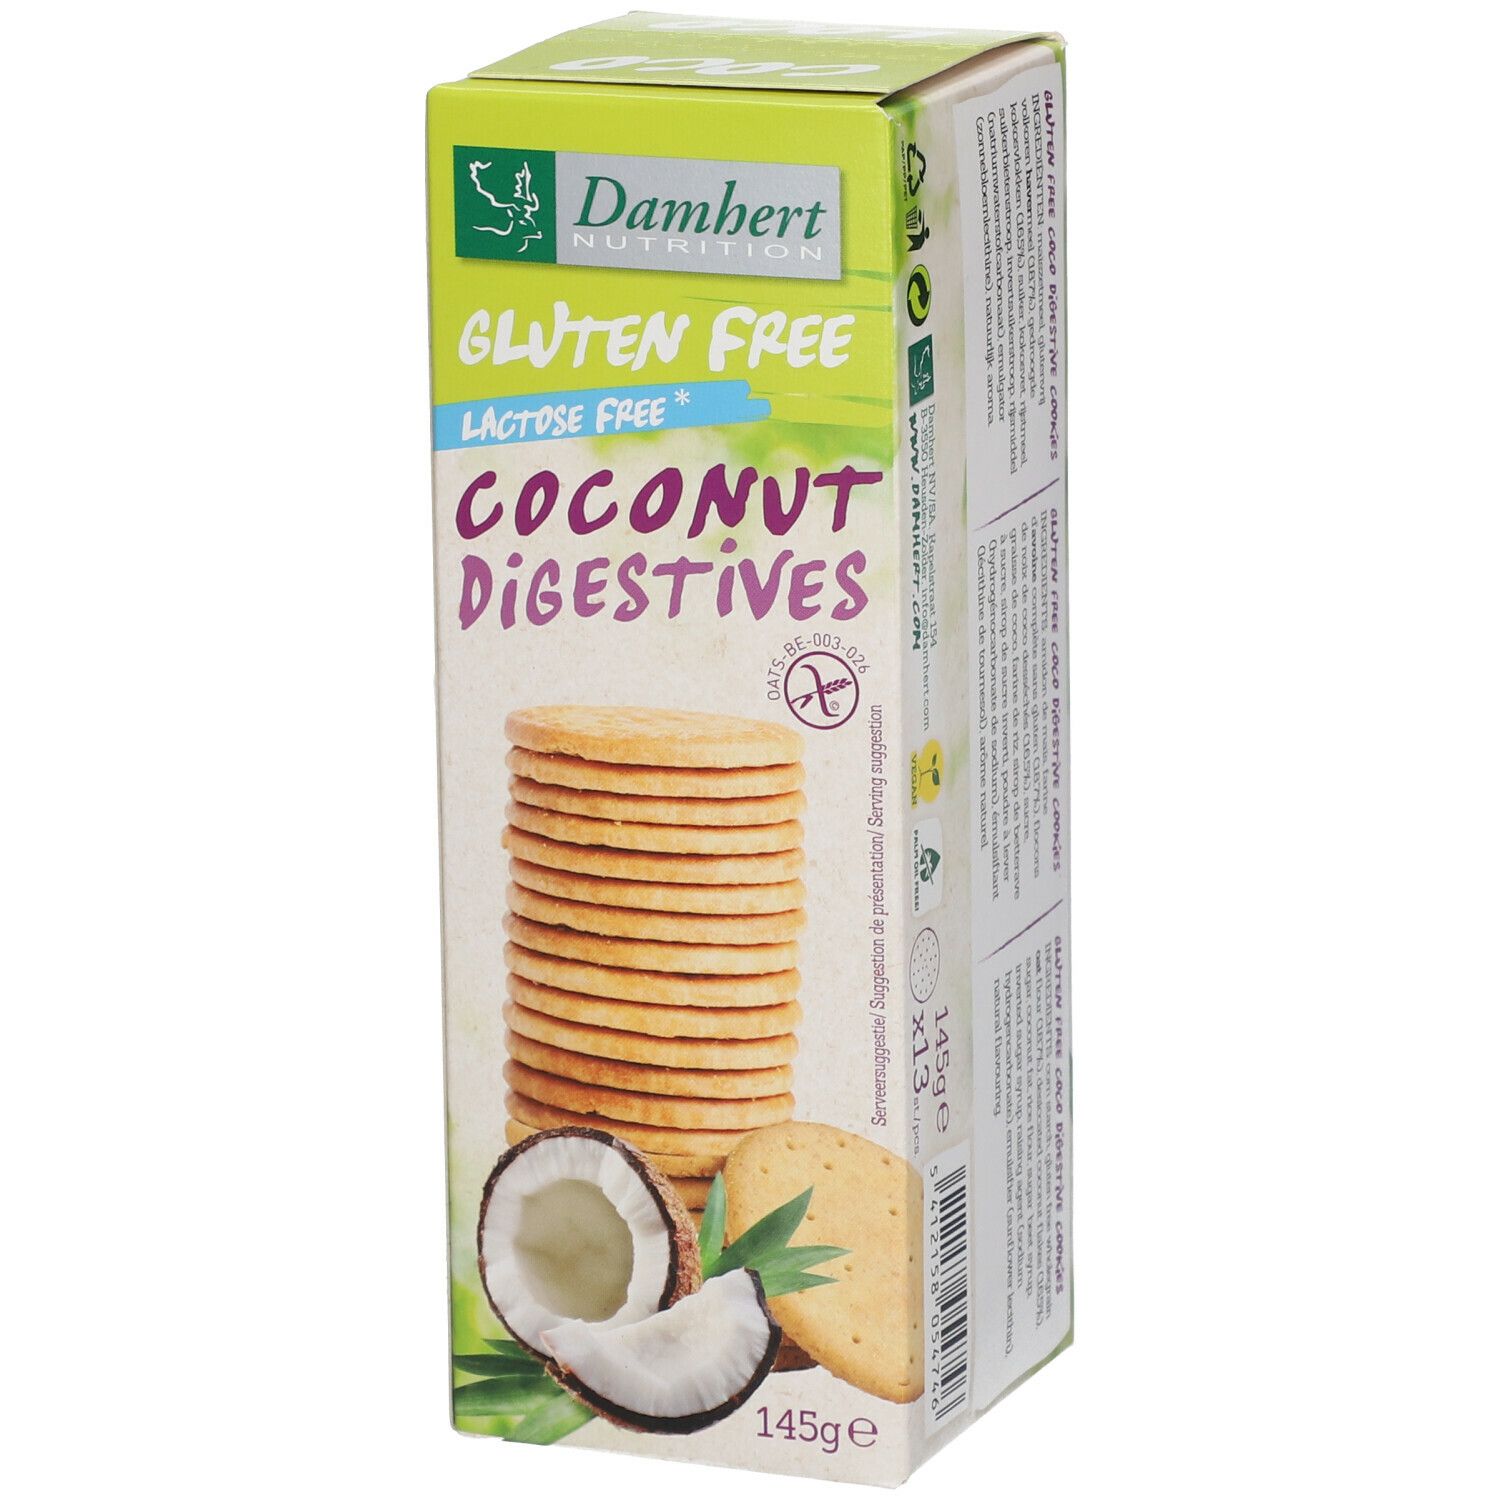 Damhert Gluten Free Coconut digestive cookies Lactose Free